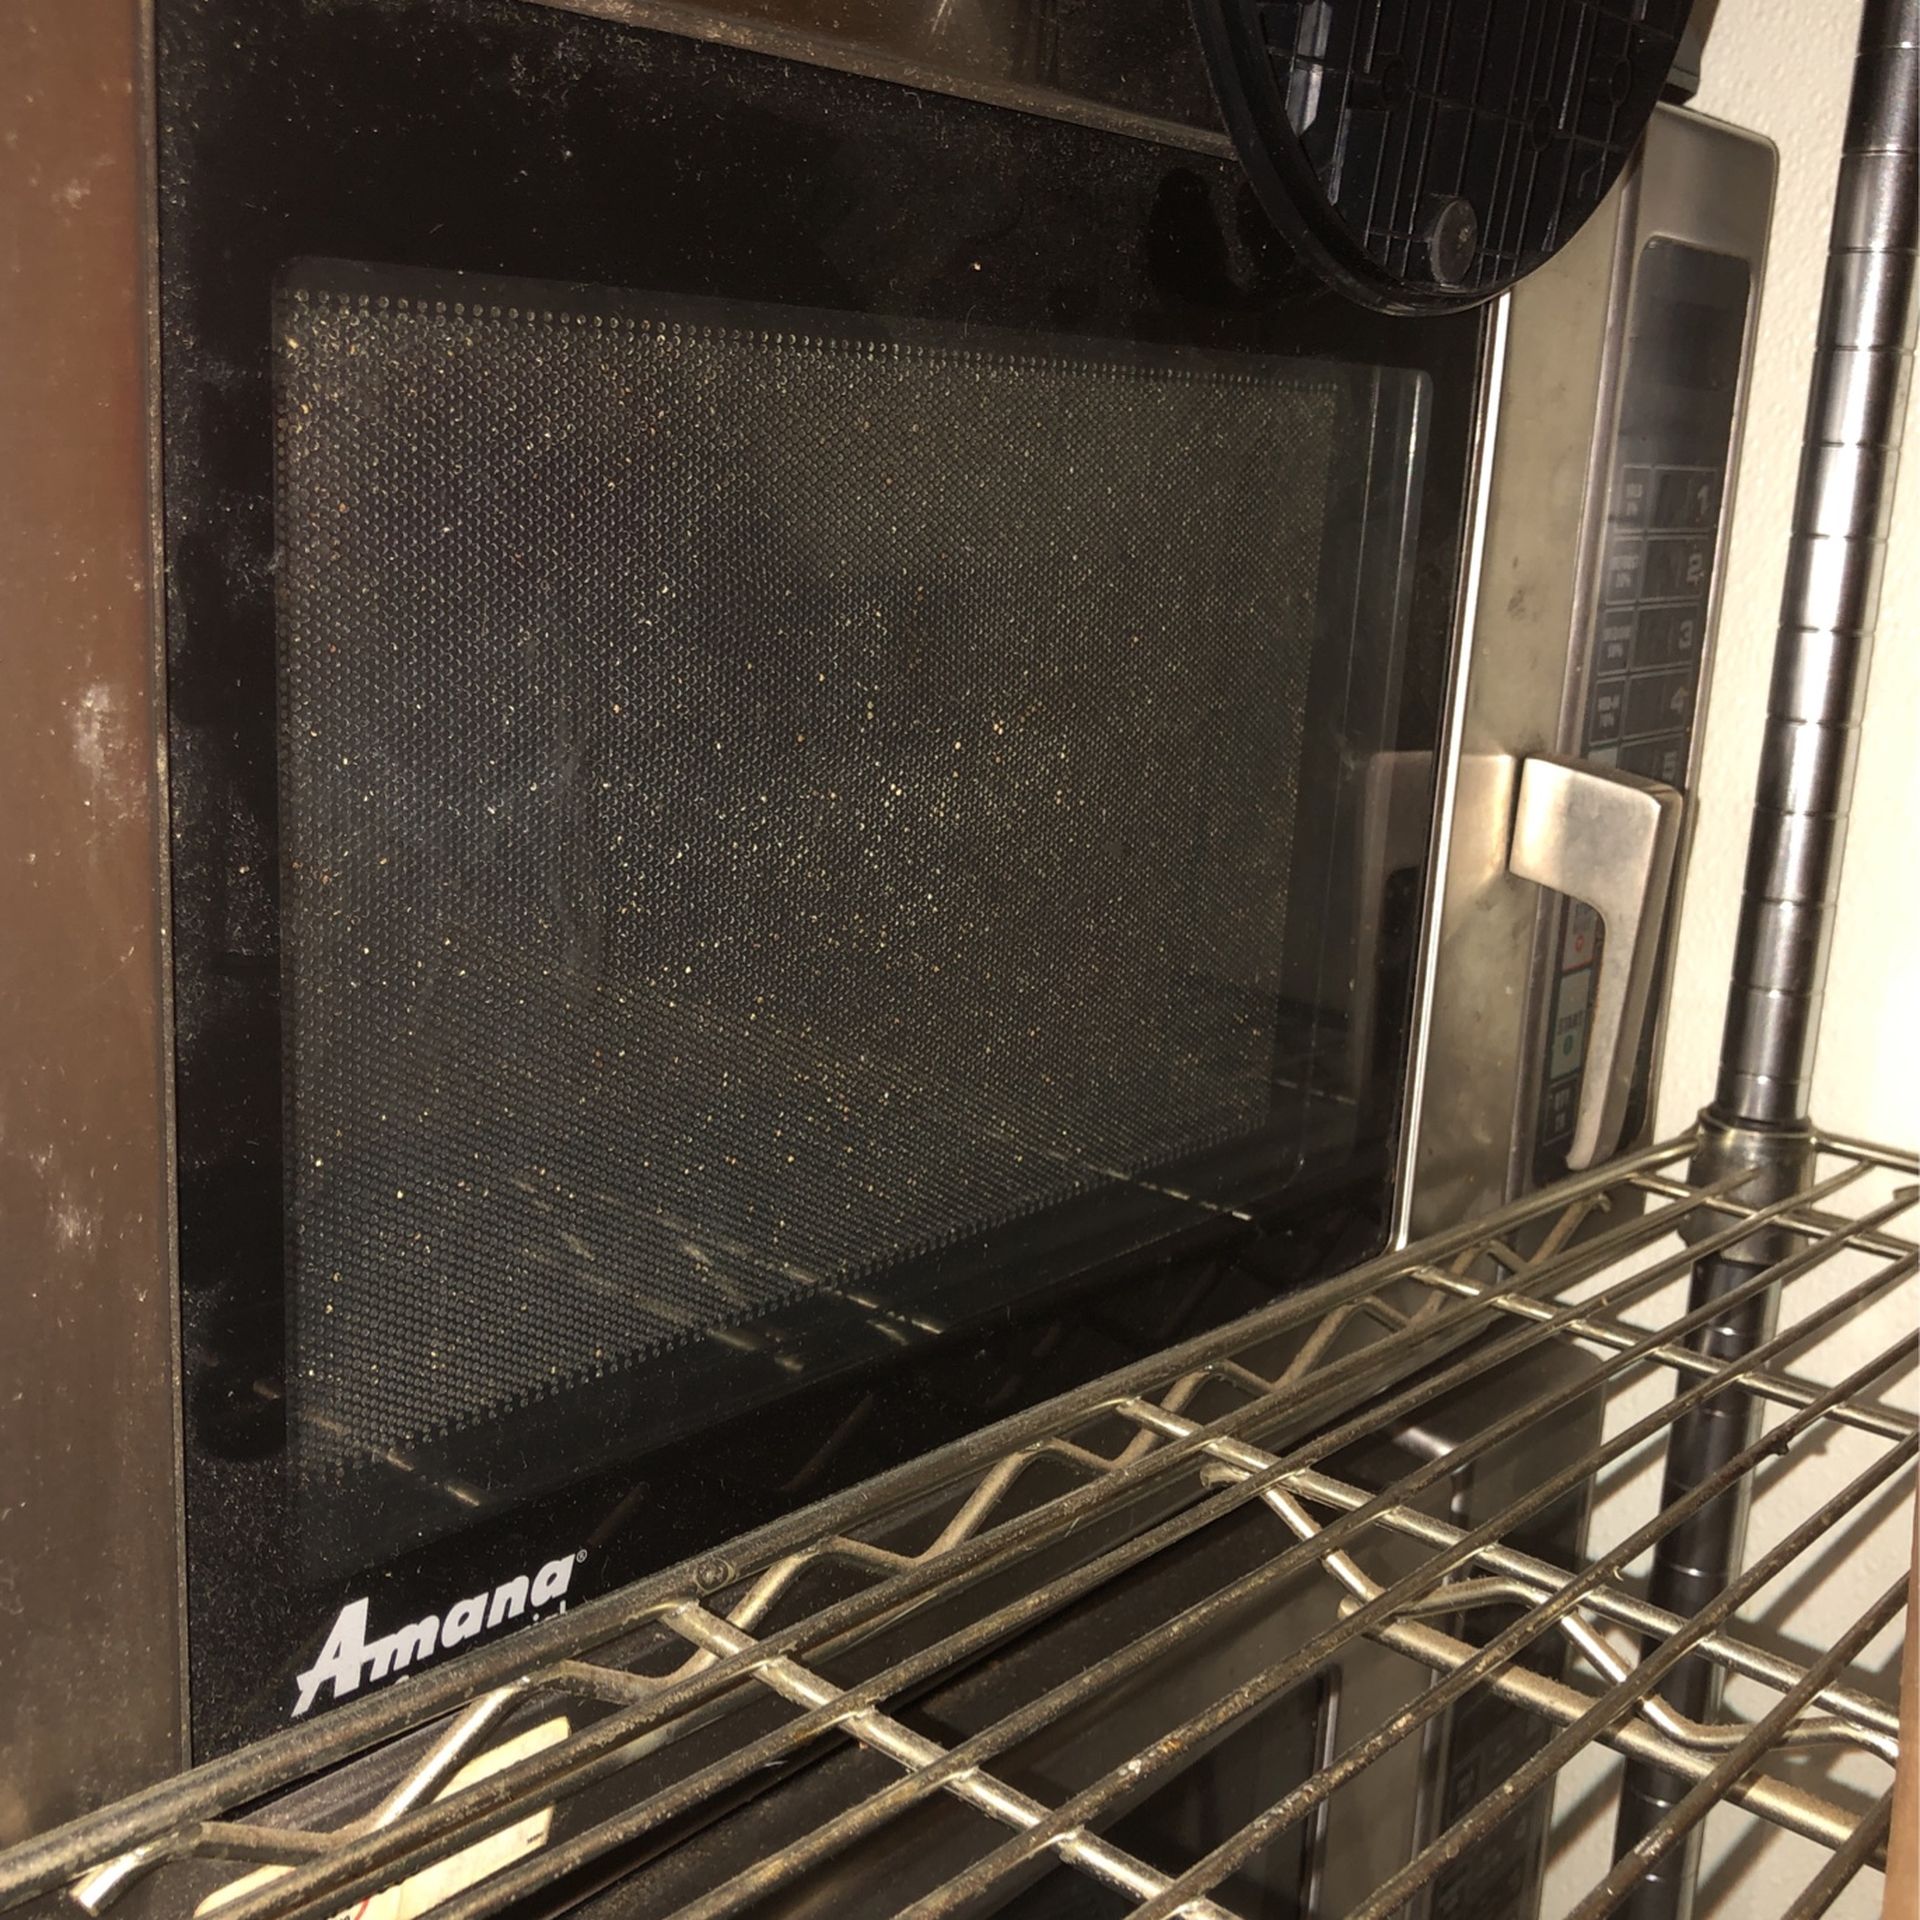 4 Commercial Microwaves, Amanda Easy Fix